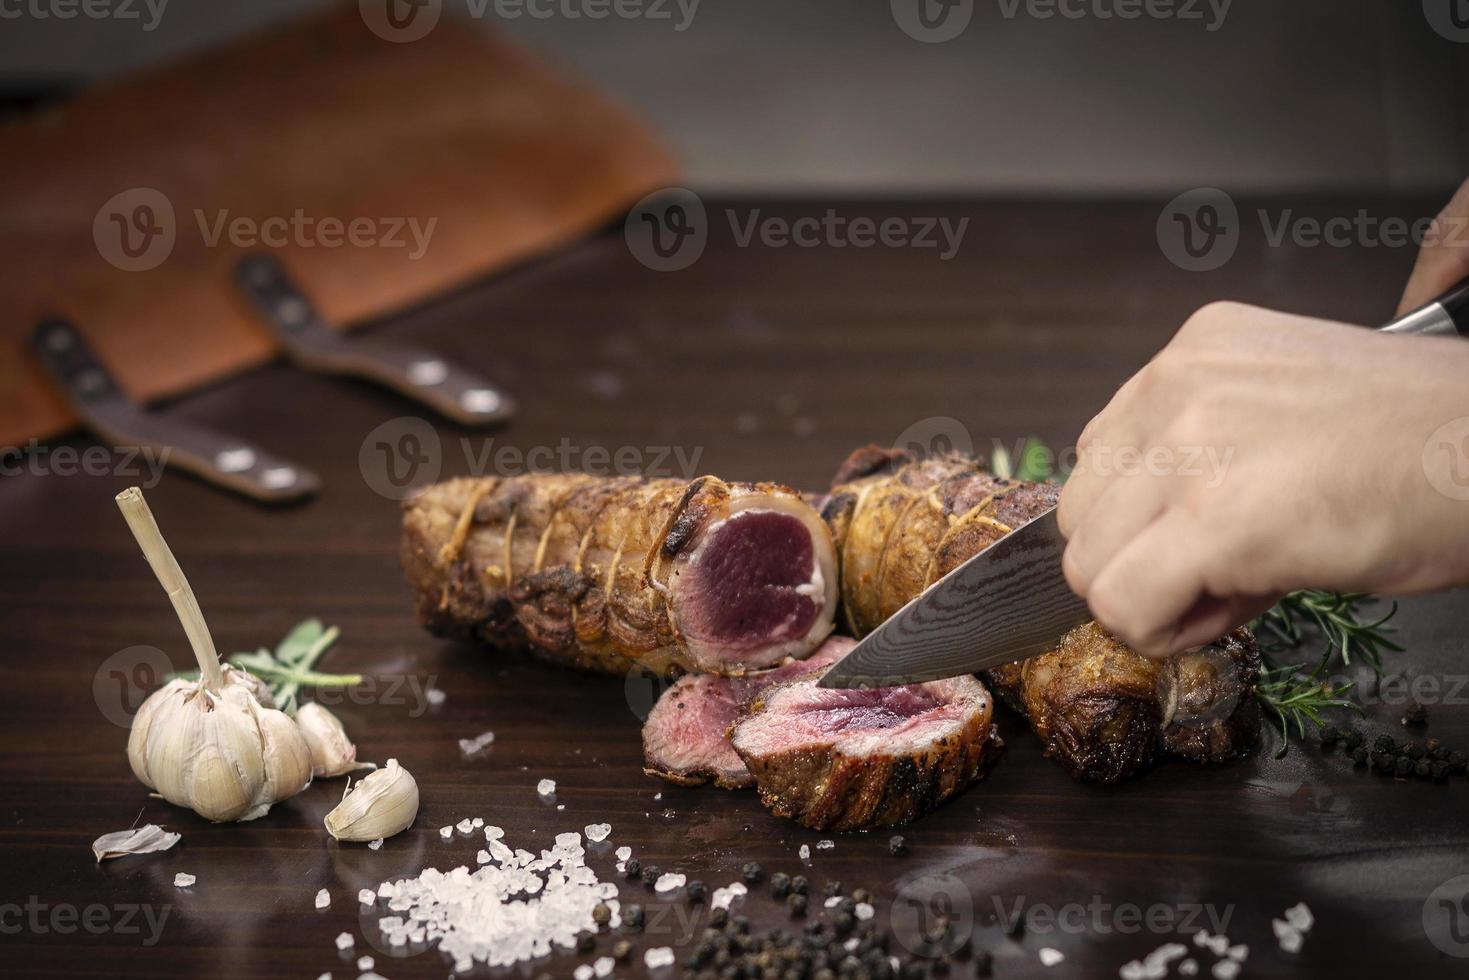 skiva en portion ekologisk rostbiff med en kniv på träbord med vitlökpeppar och salt i Melbourne Australien foto